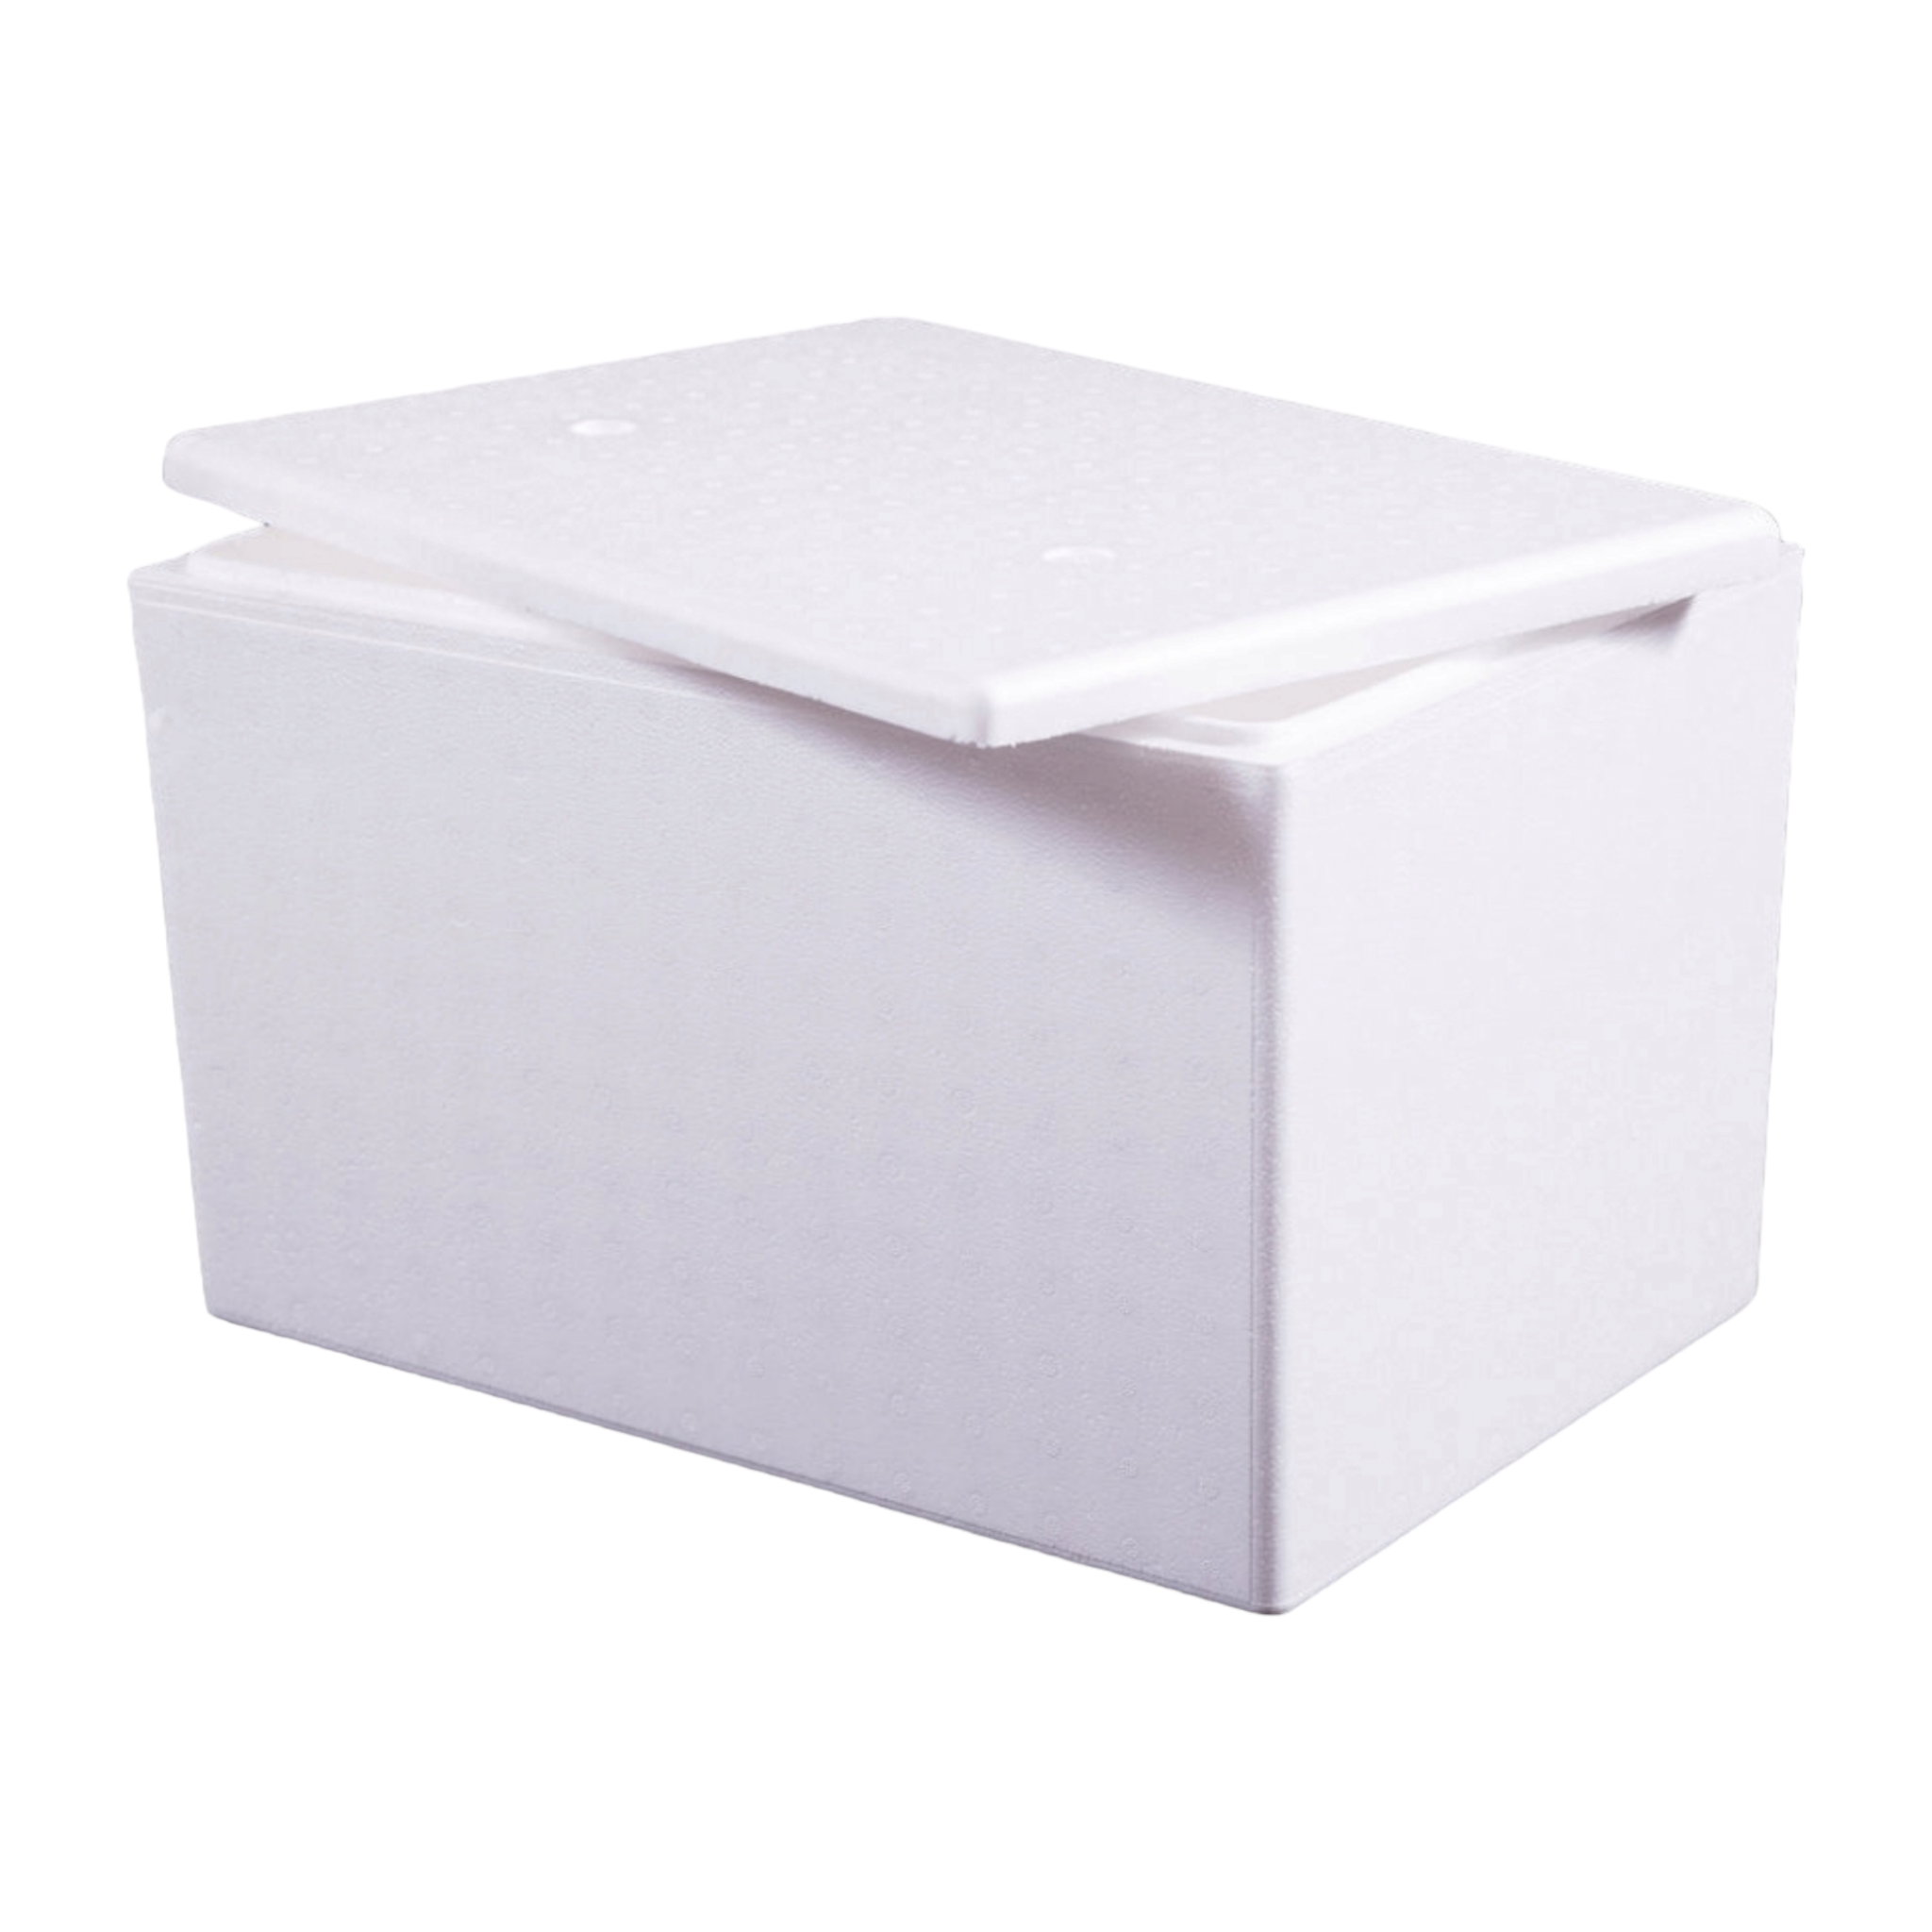 Polystyrene Cooler Box 22L Thermal Storage Box